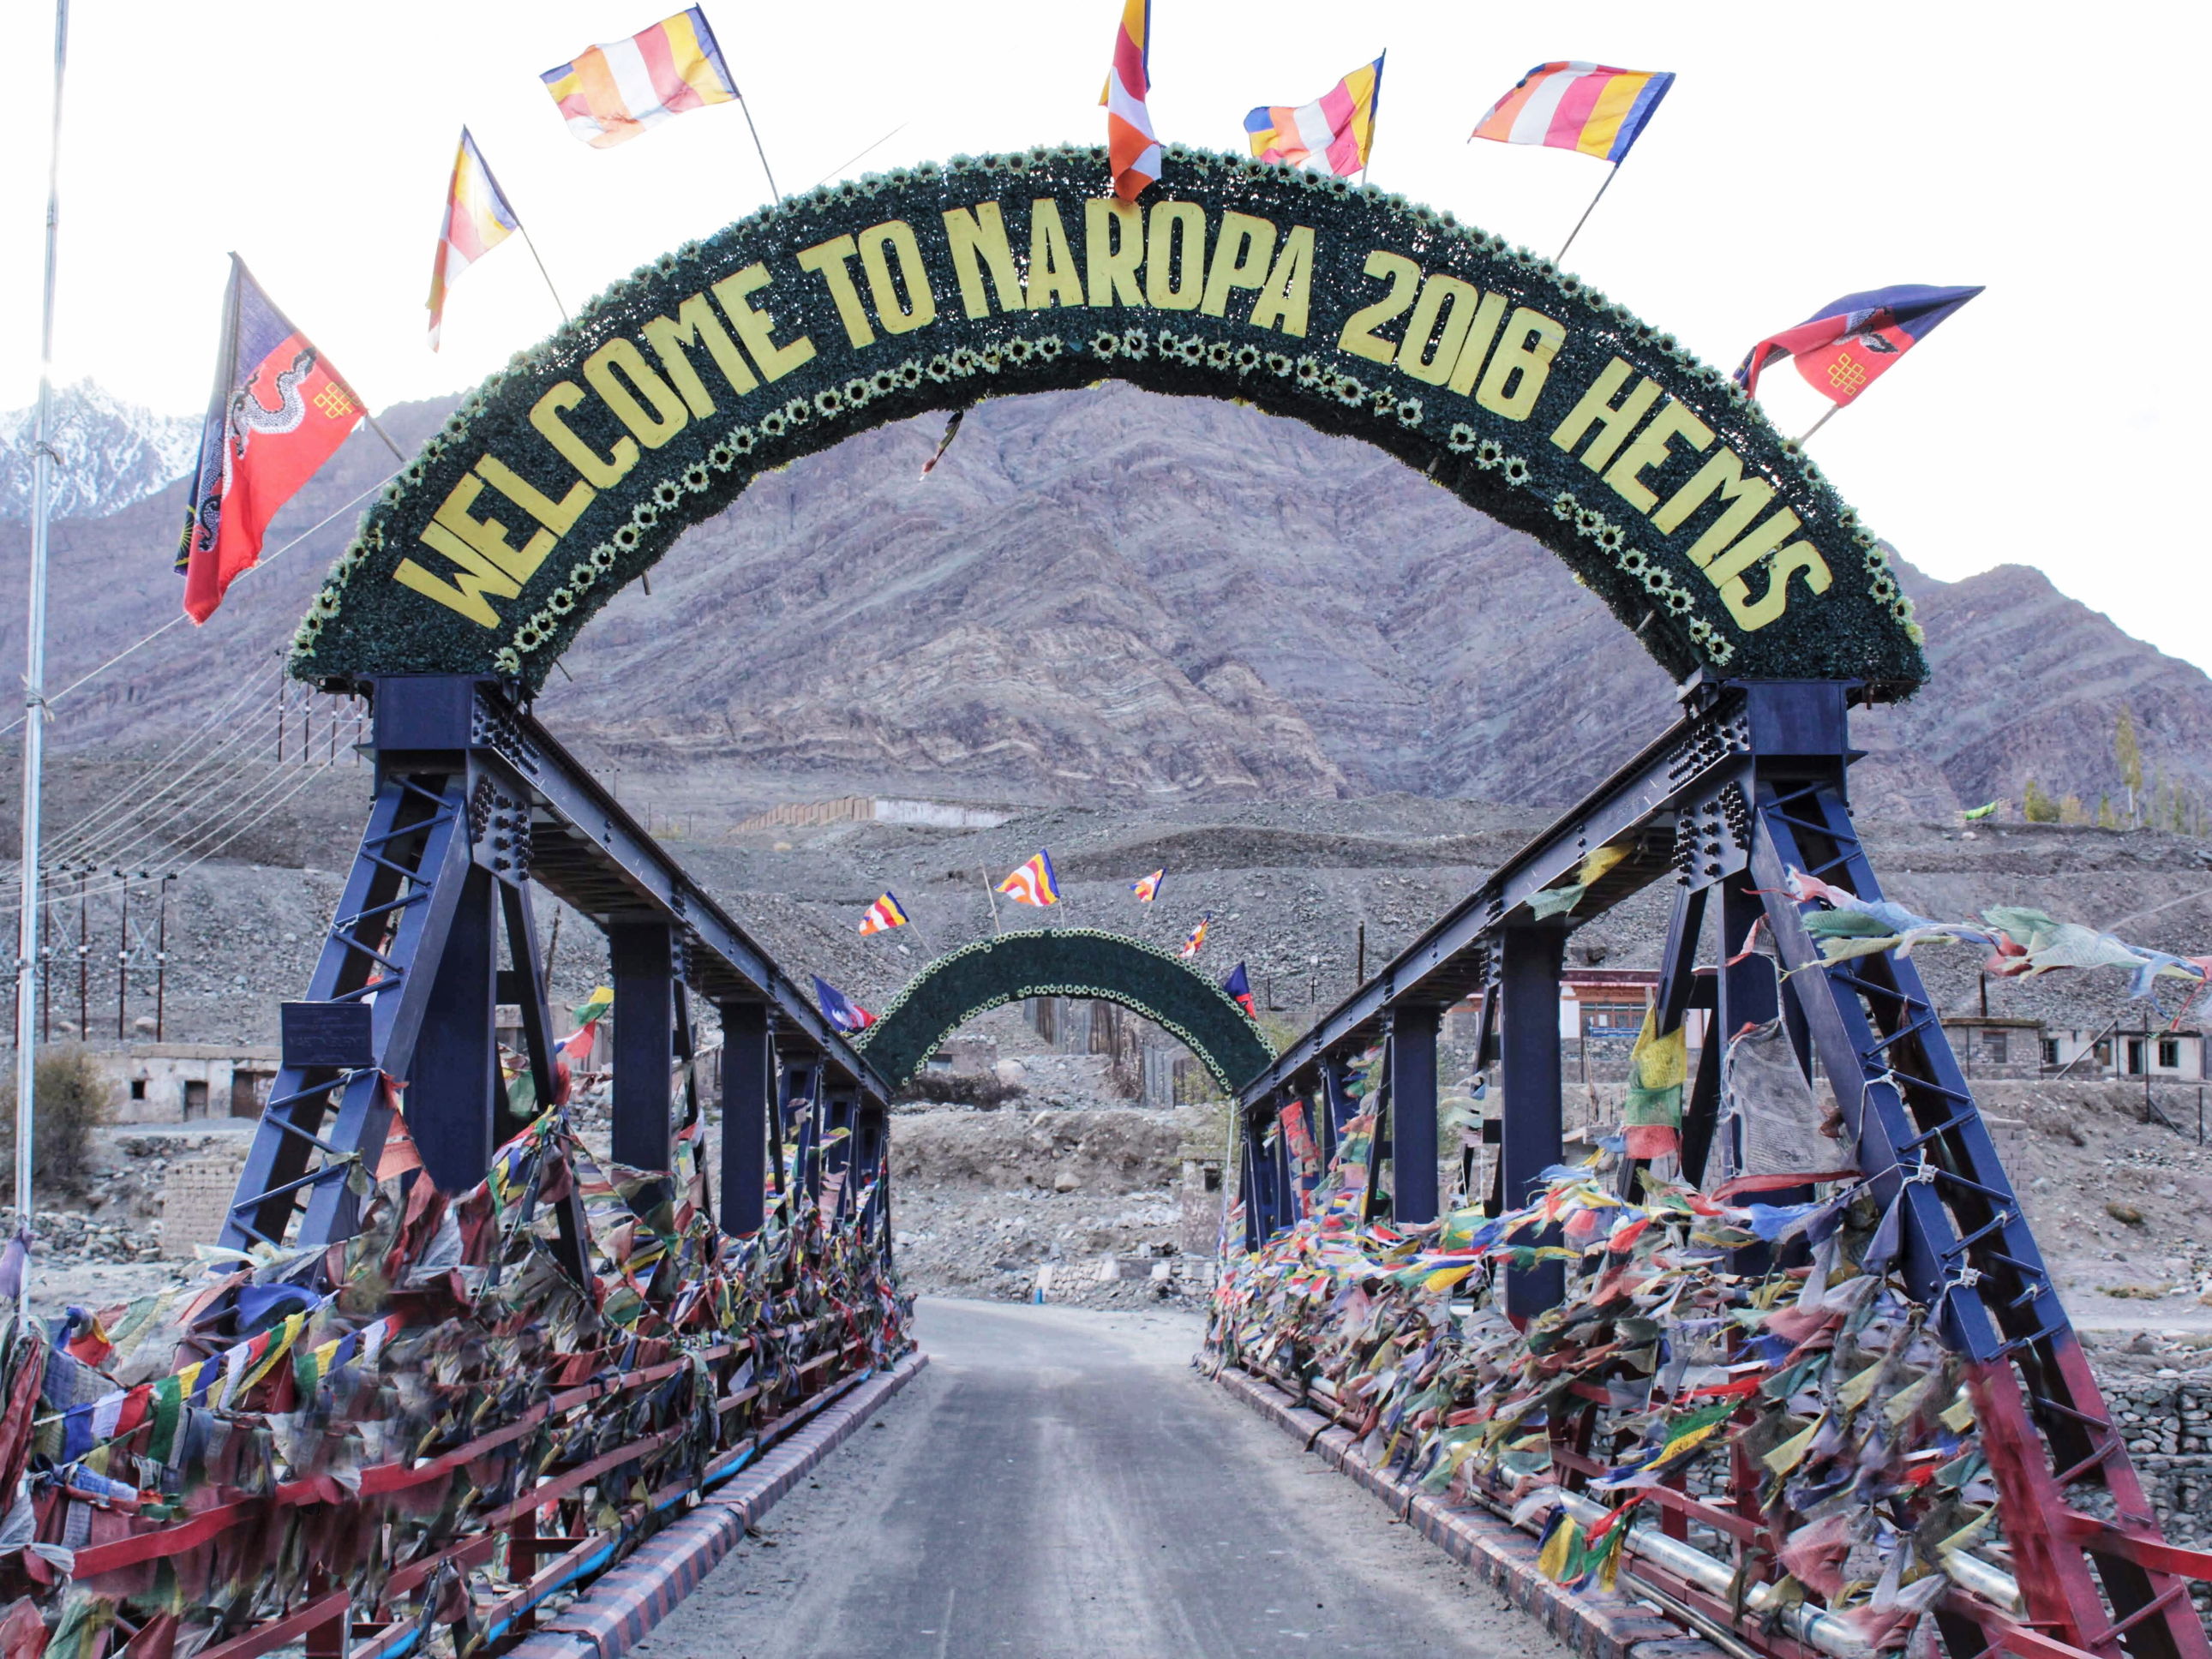 Welcome to Naropa, the Hemis Monestry's Gateway in Leh